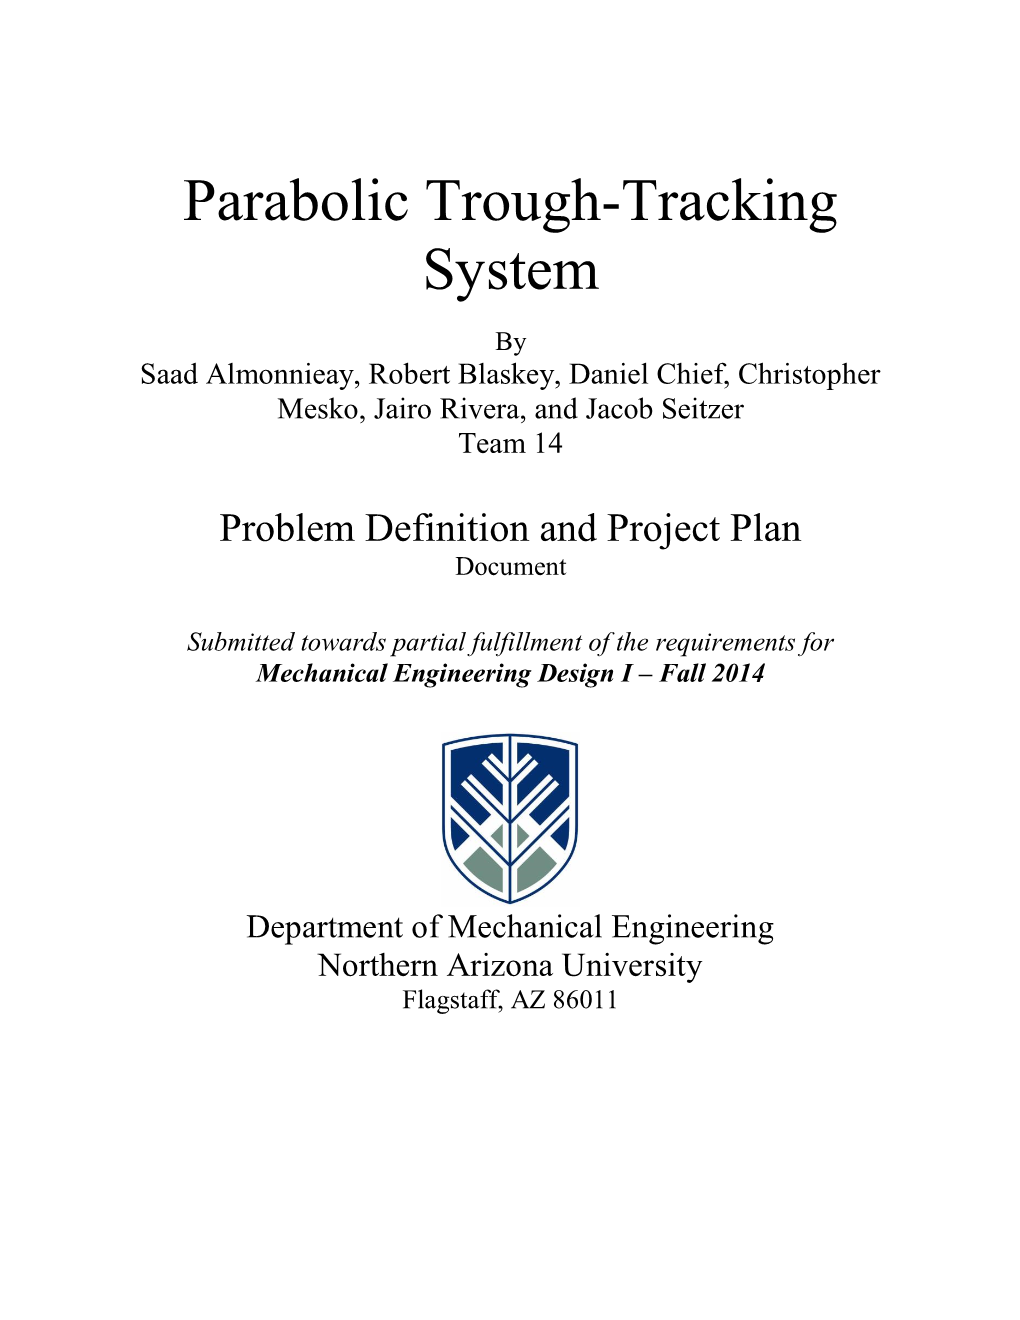 Parabolic Trough-Tracking System